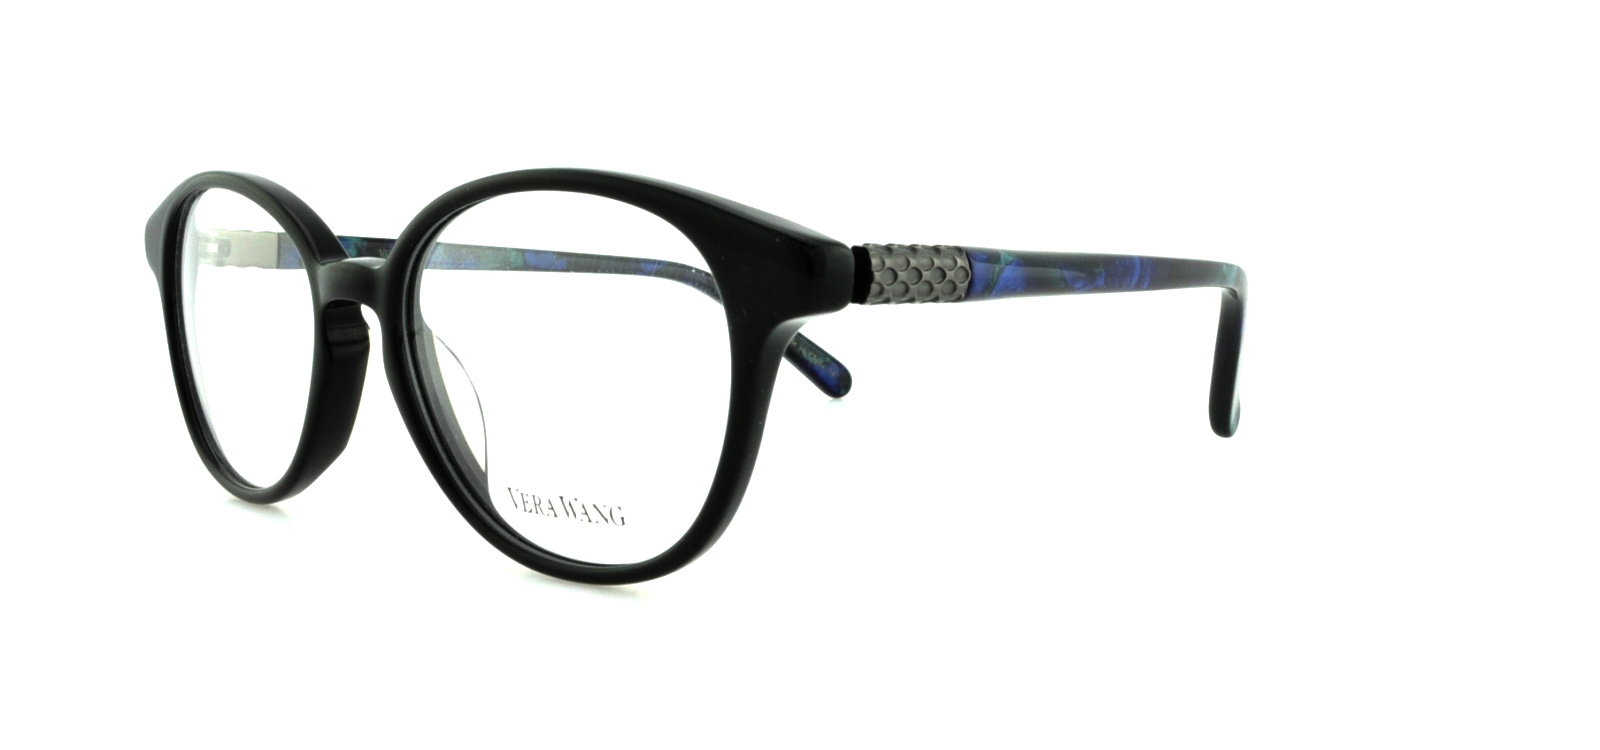 Picture of Vera Wang Eyeglasses V315